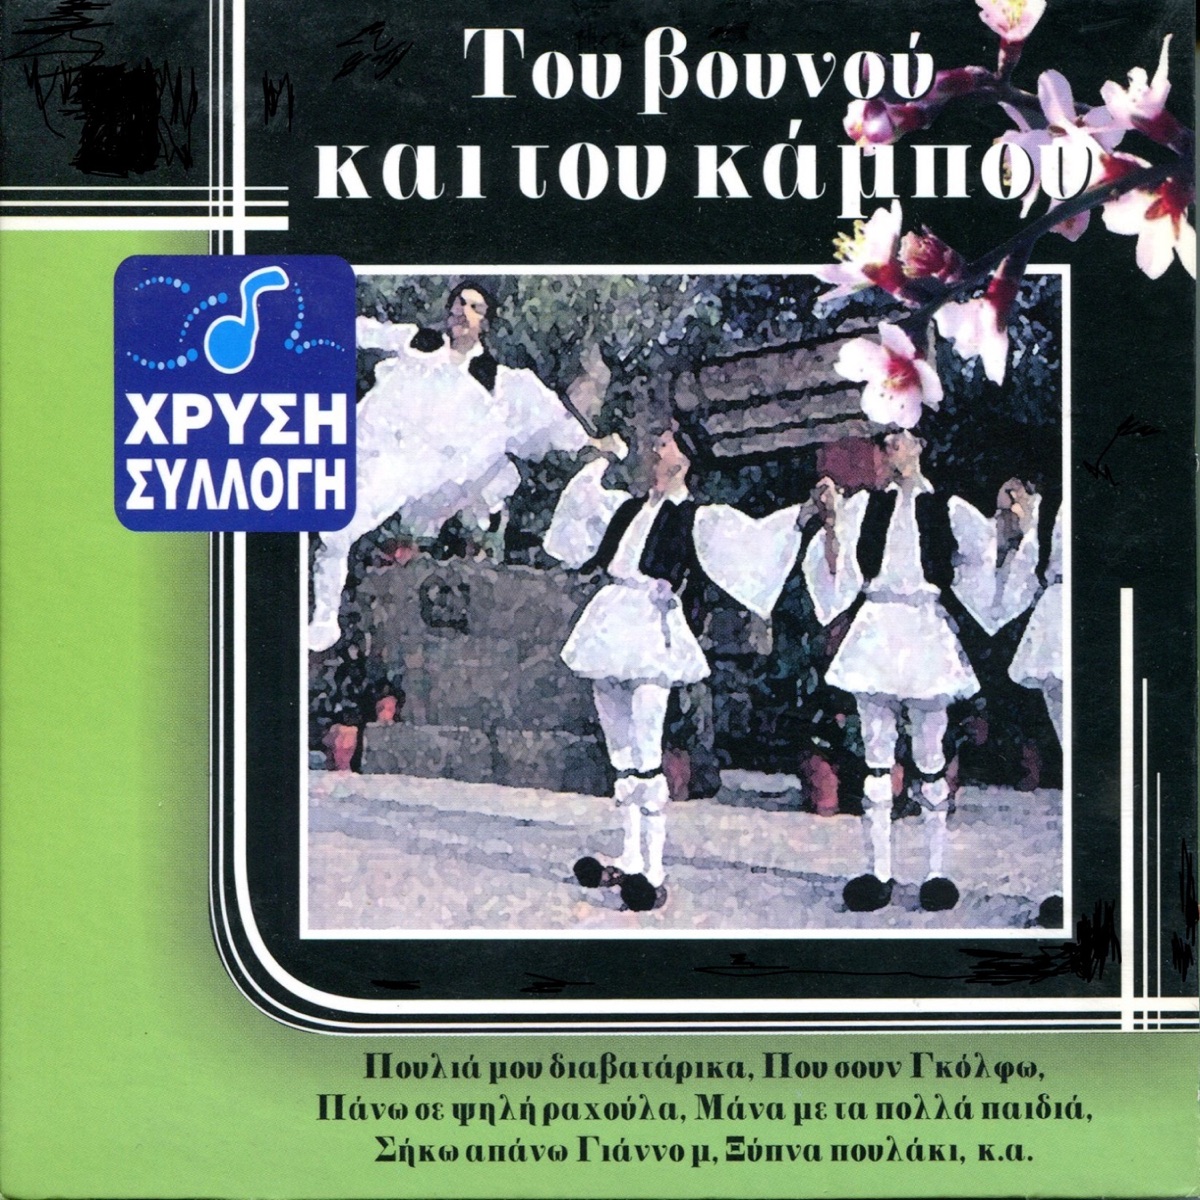 Zontana Stou Mpampi Tis Kifisias (Ζωντανά Στου Μπάμπη Της Κηφισιάς) - Album  by Efi Thodi - Apple Music